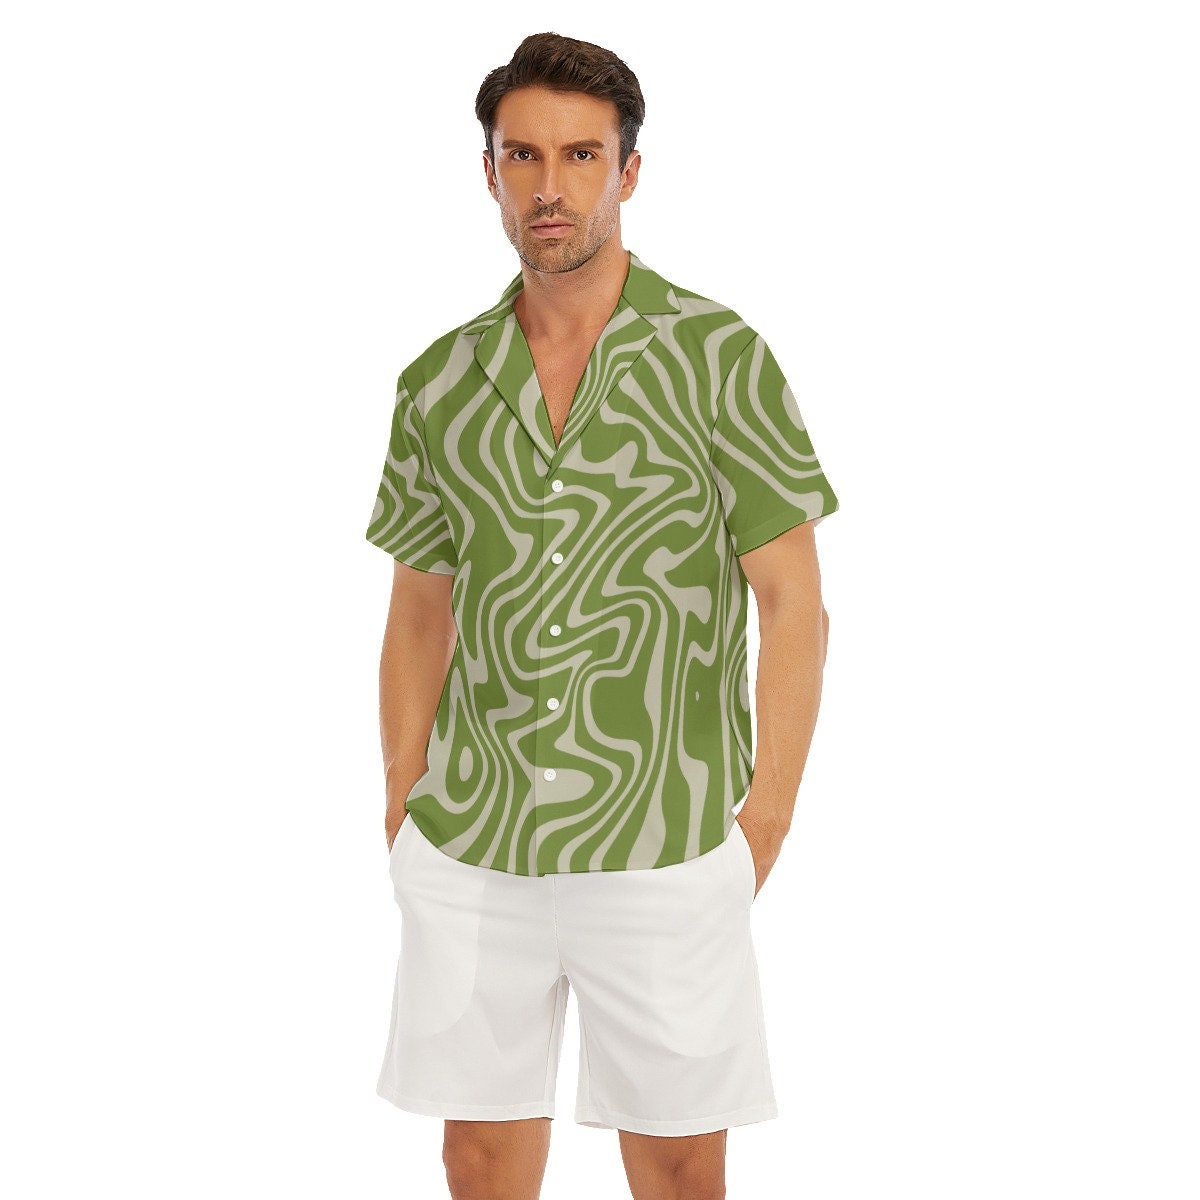 Vintage 70s style shirt, Retro Shirt Men, Green Groovy Shirt Men, Hippie Shirt Men, Men's Green shirt, 70s Shirt Men, 70s inspired shirt